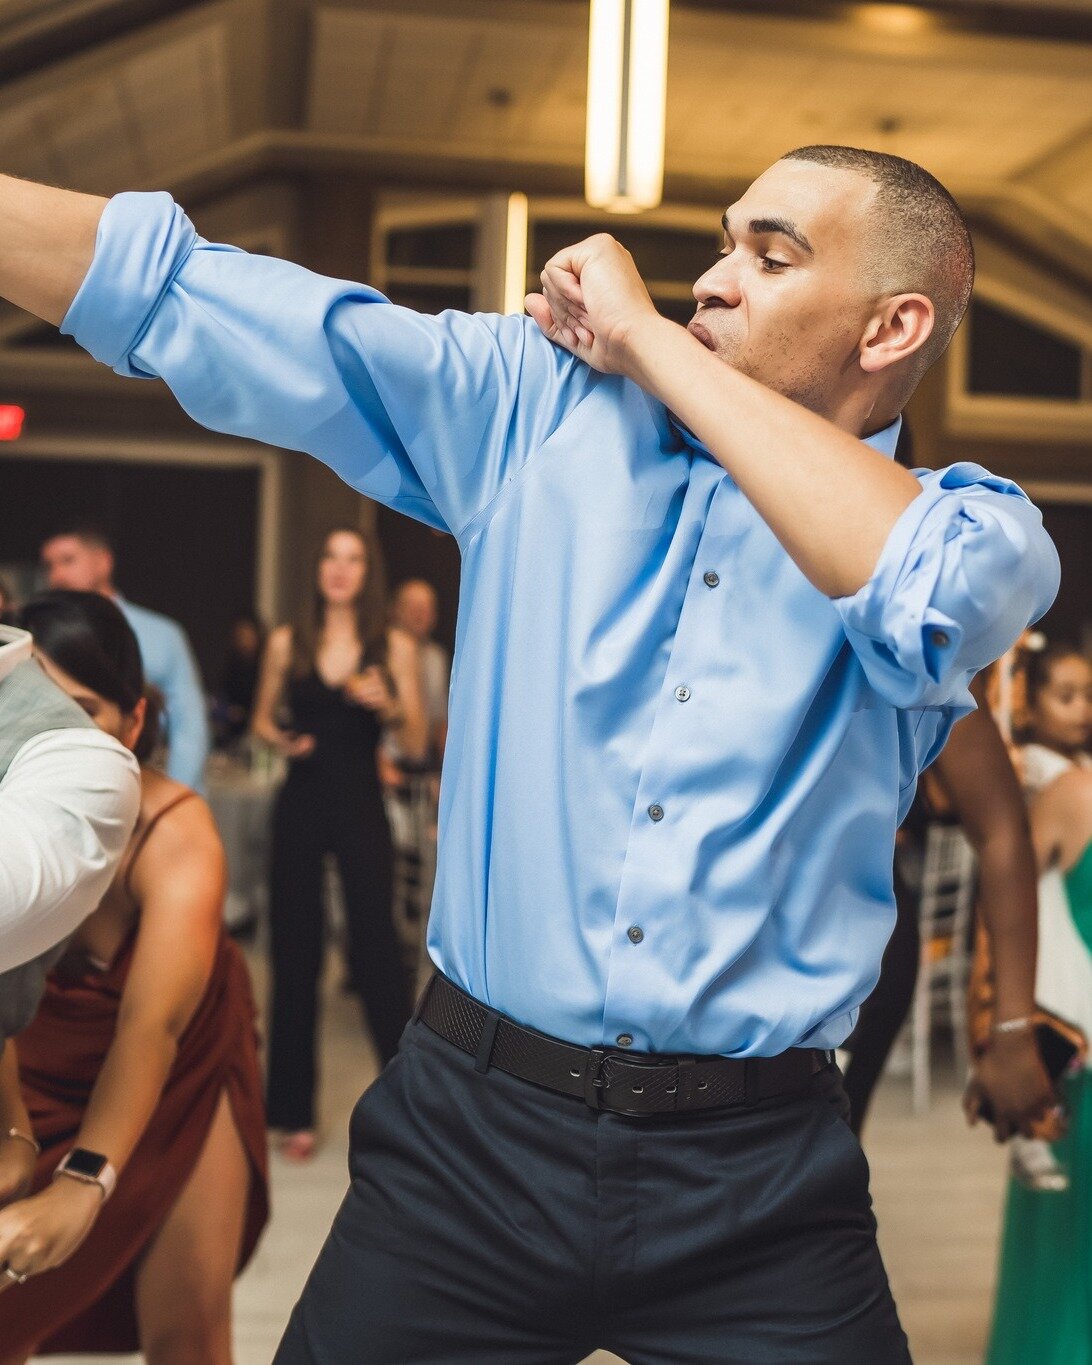 Left, Right, Up, Down - cheat code for full dance floor 🎮👾

Venue @mercerboathouse
Photos by @inbalsivanphoto
Music by @onthebeatfx @djjaymurch

#jerseybride #jerseywedding #boathouseatmercerlake #njweddingdj #weddinginspo #weddinghacks